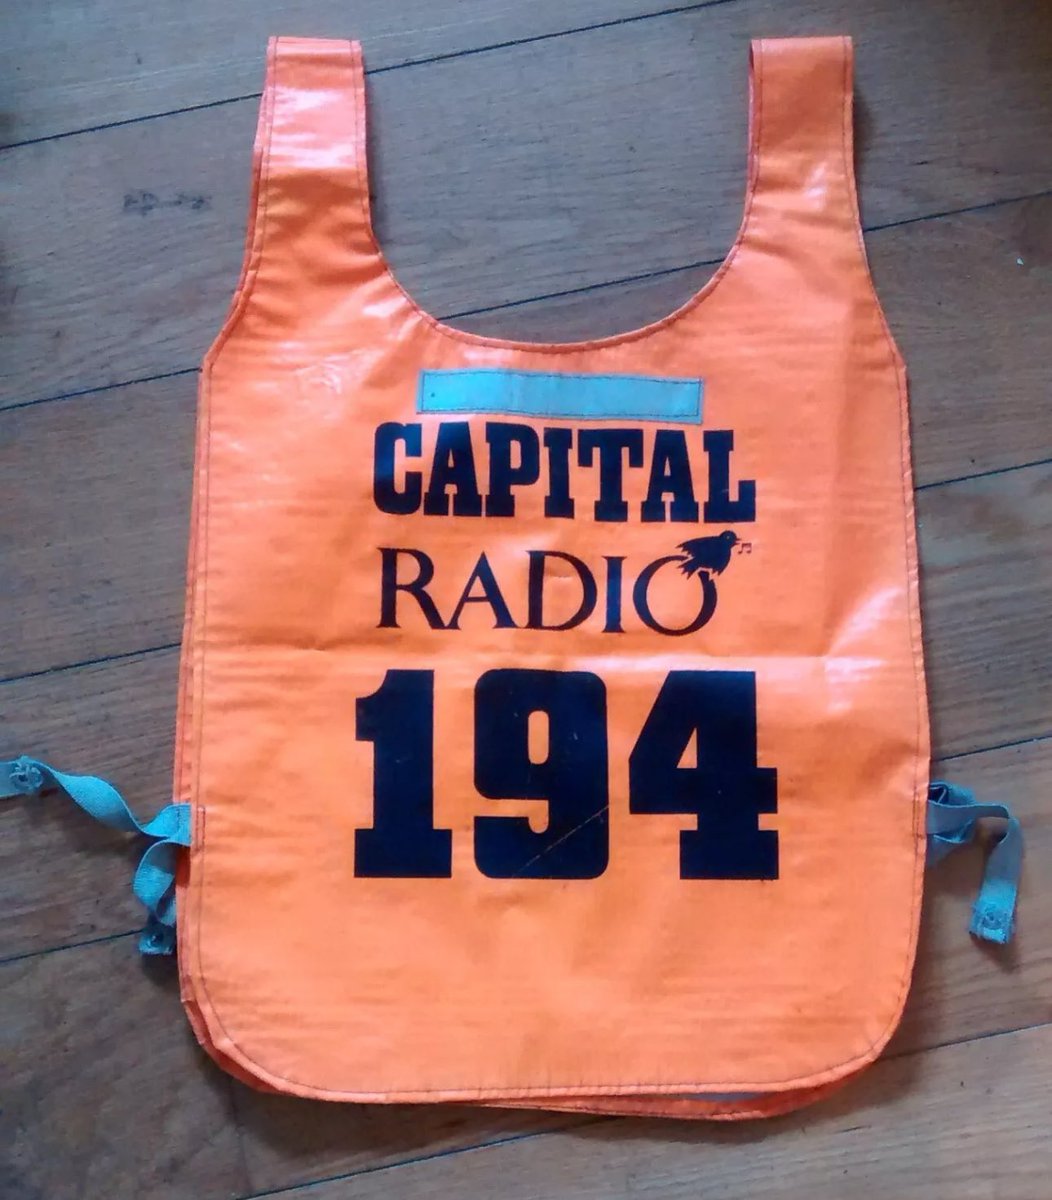 Hi-vis vests. We haven’t done hi-vis vests before @Capradland #CapitalRadio #radiomerch